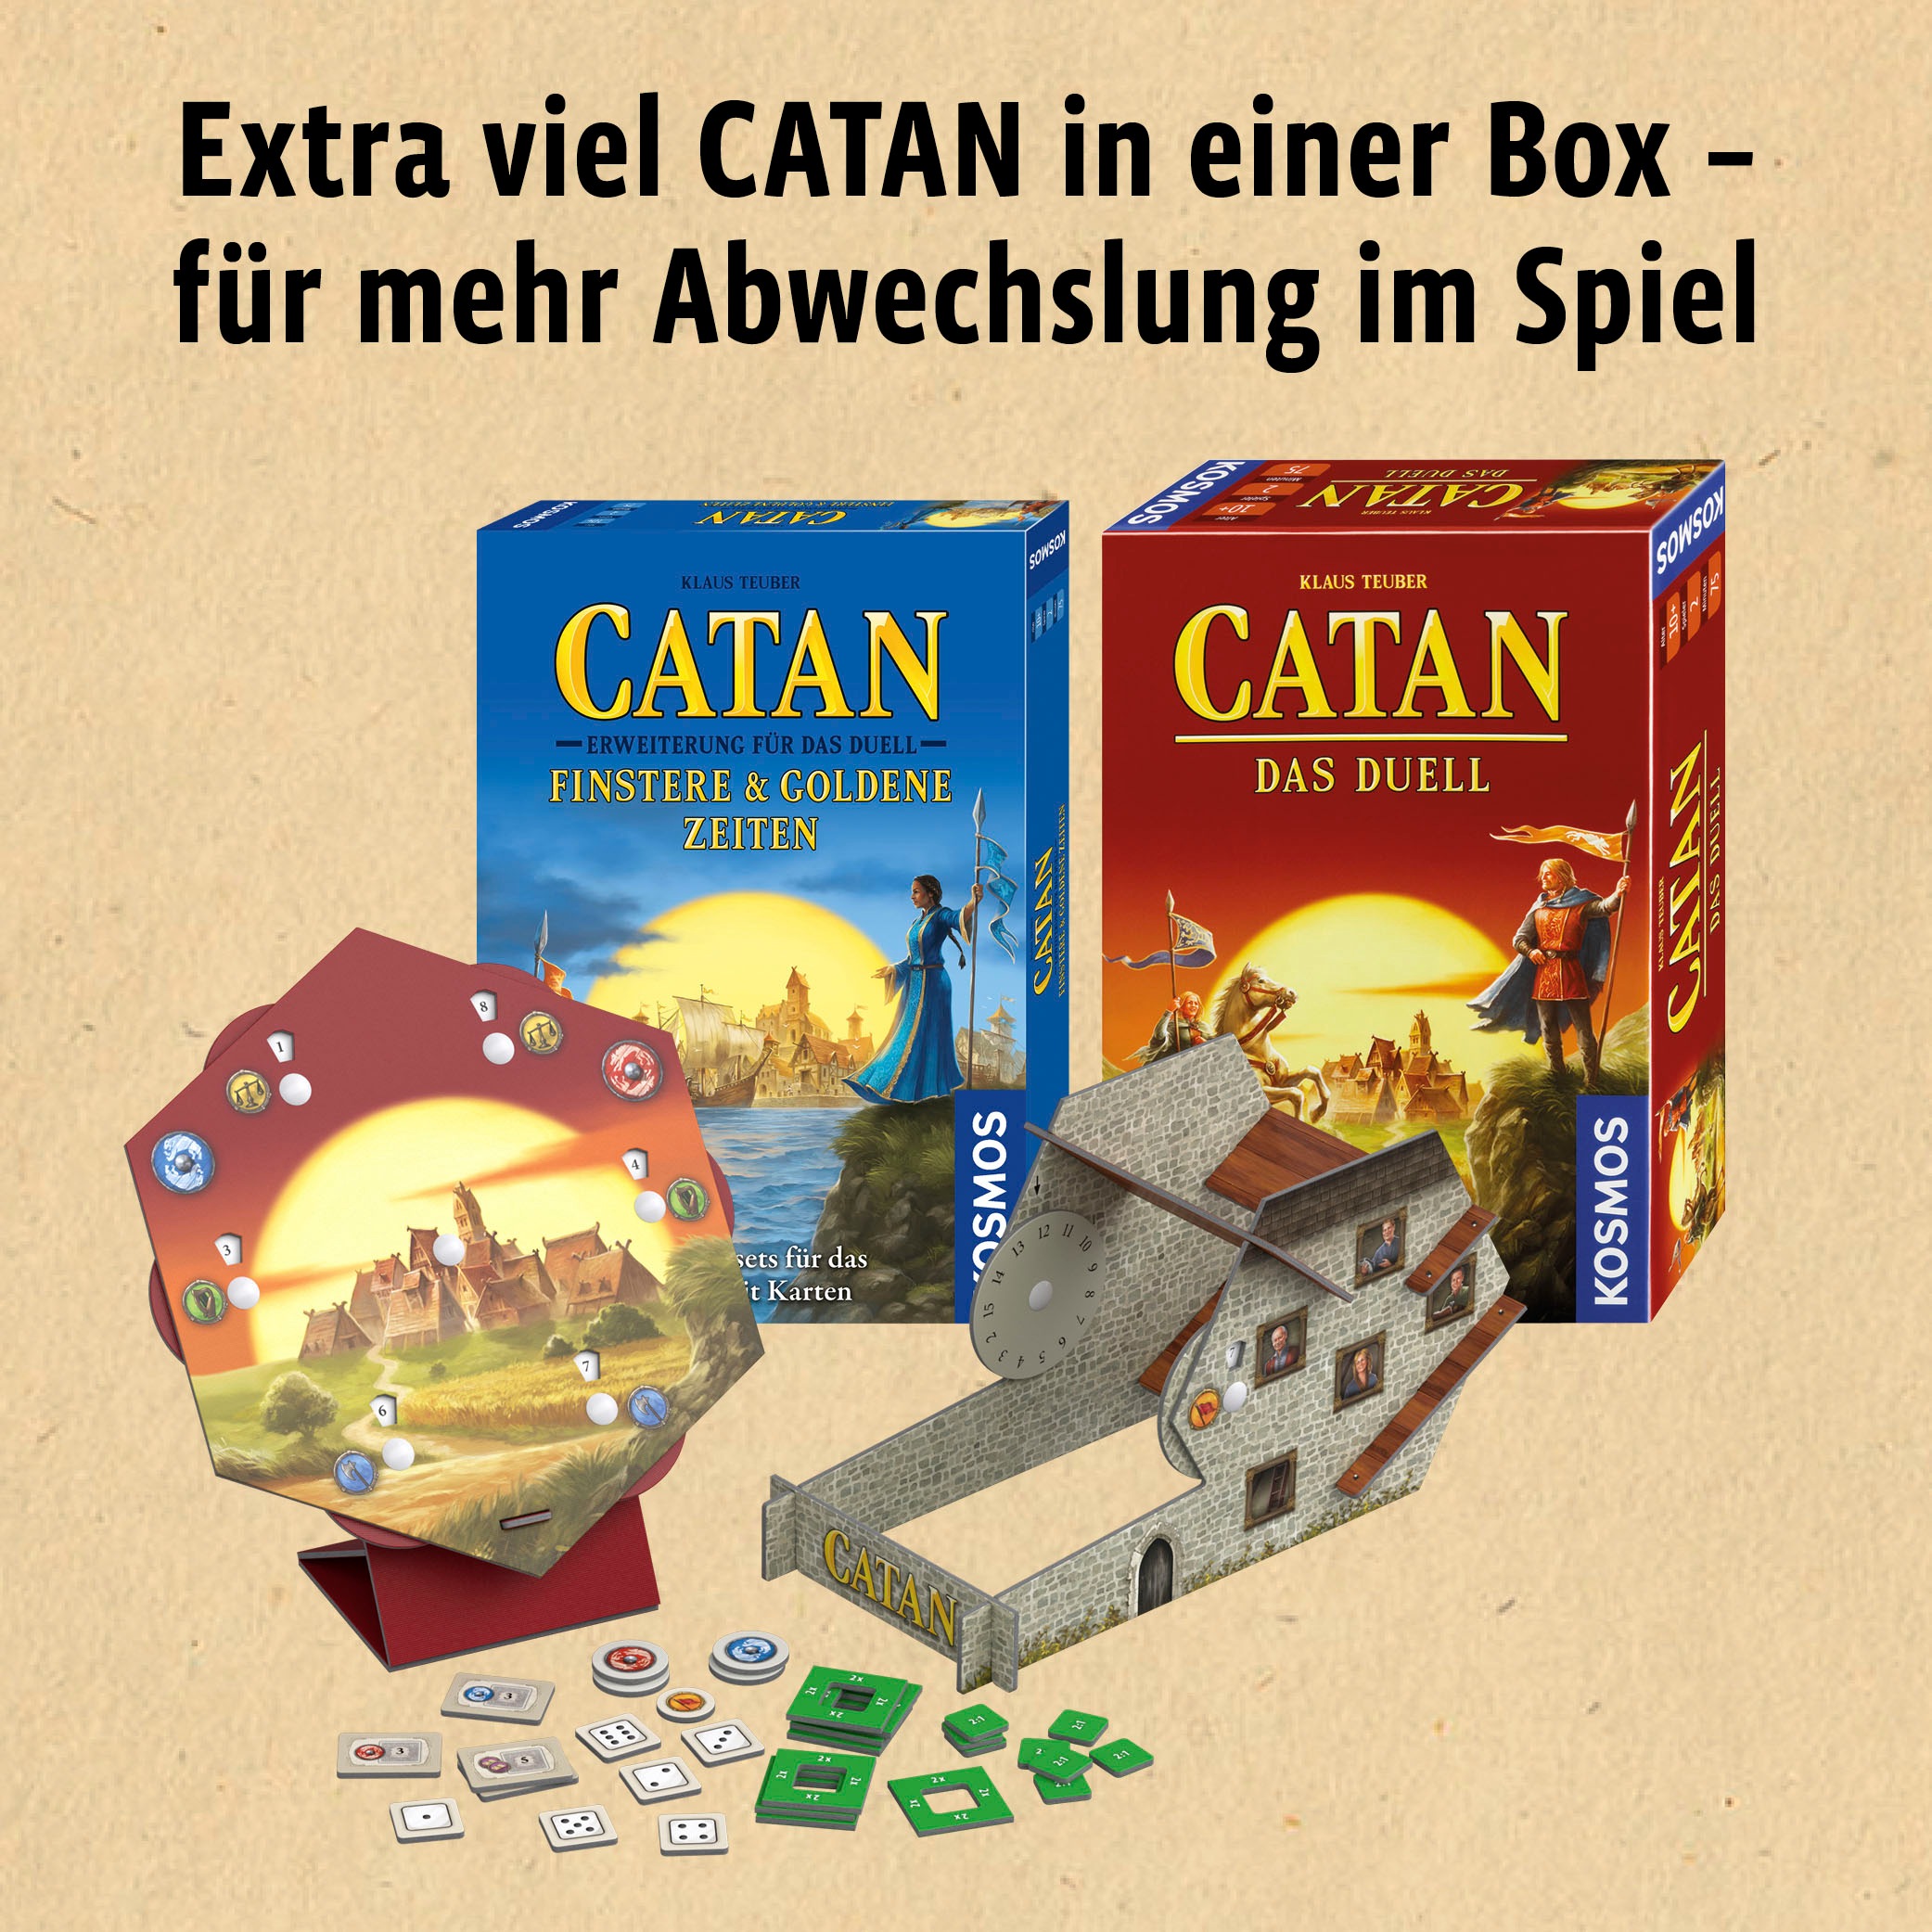 Kosmos Spiel »Catan - Das Duell - Big Box«, Made in Germany